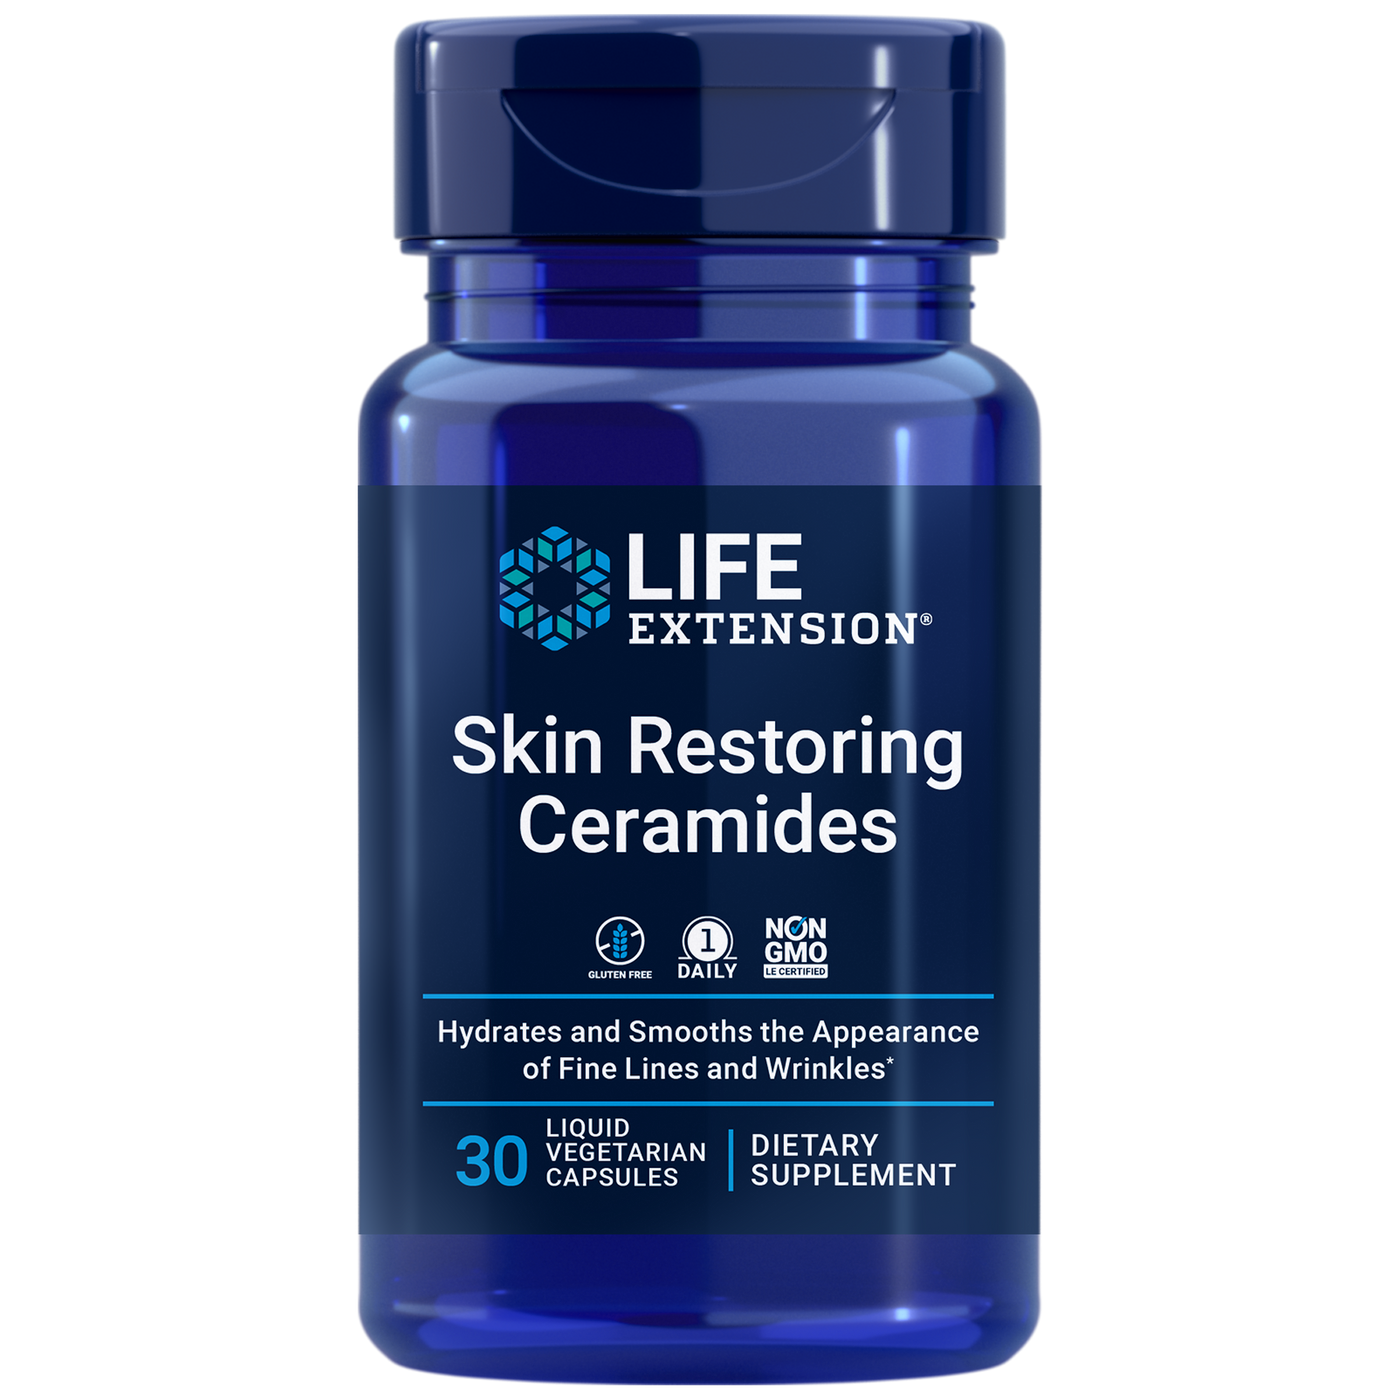 Skin Restoring Ceramides 30 liq vegcaps Curated Wellness